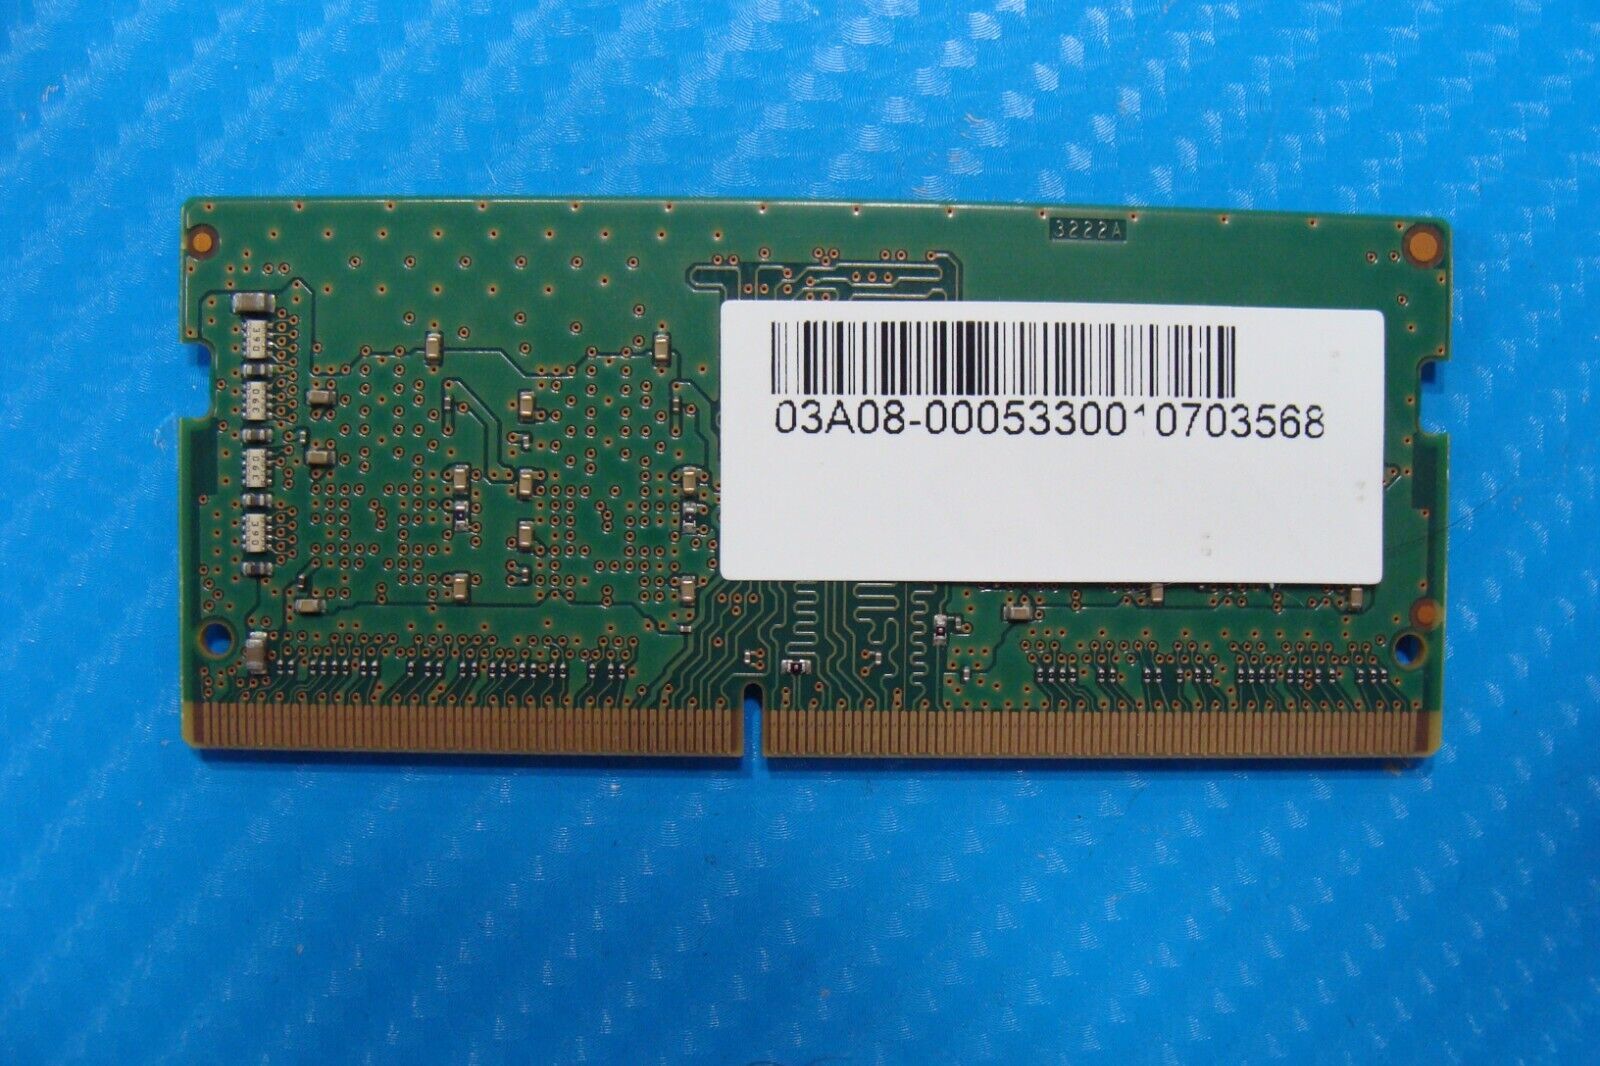 ASUS FX516PM Micron 8GB 1Rx16 PC4-3200AA Memory RAM SO-DIMM MTA4ATF1G64HZ-3G2E2